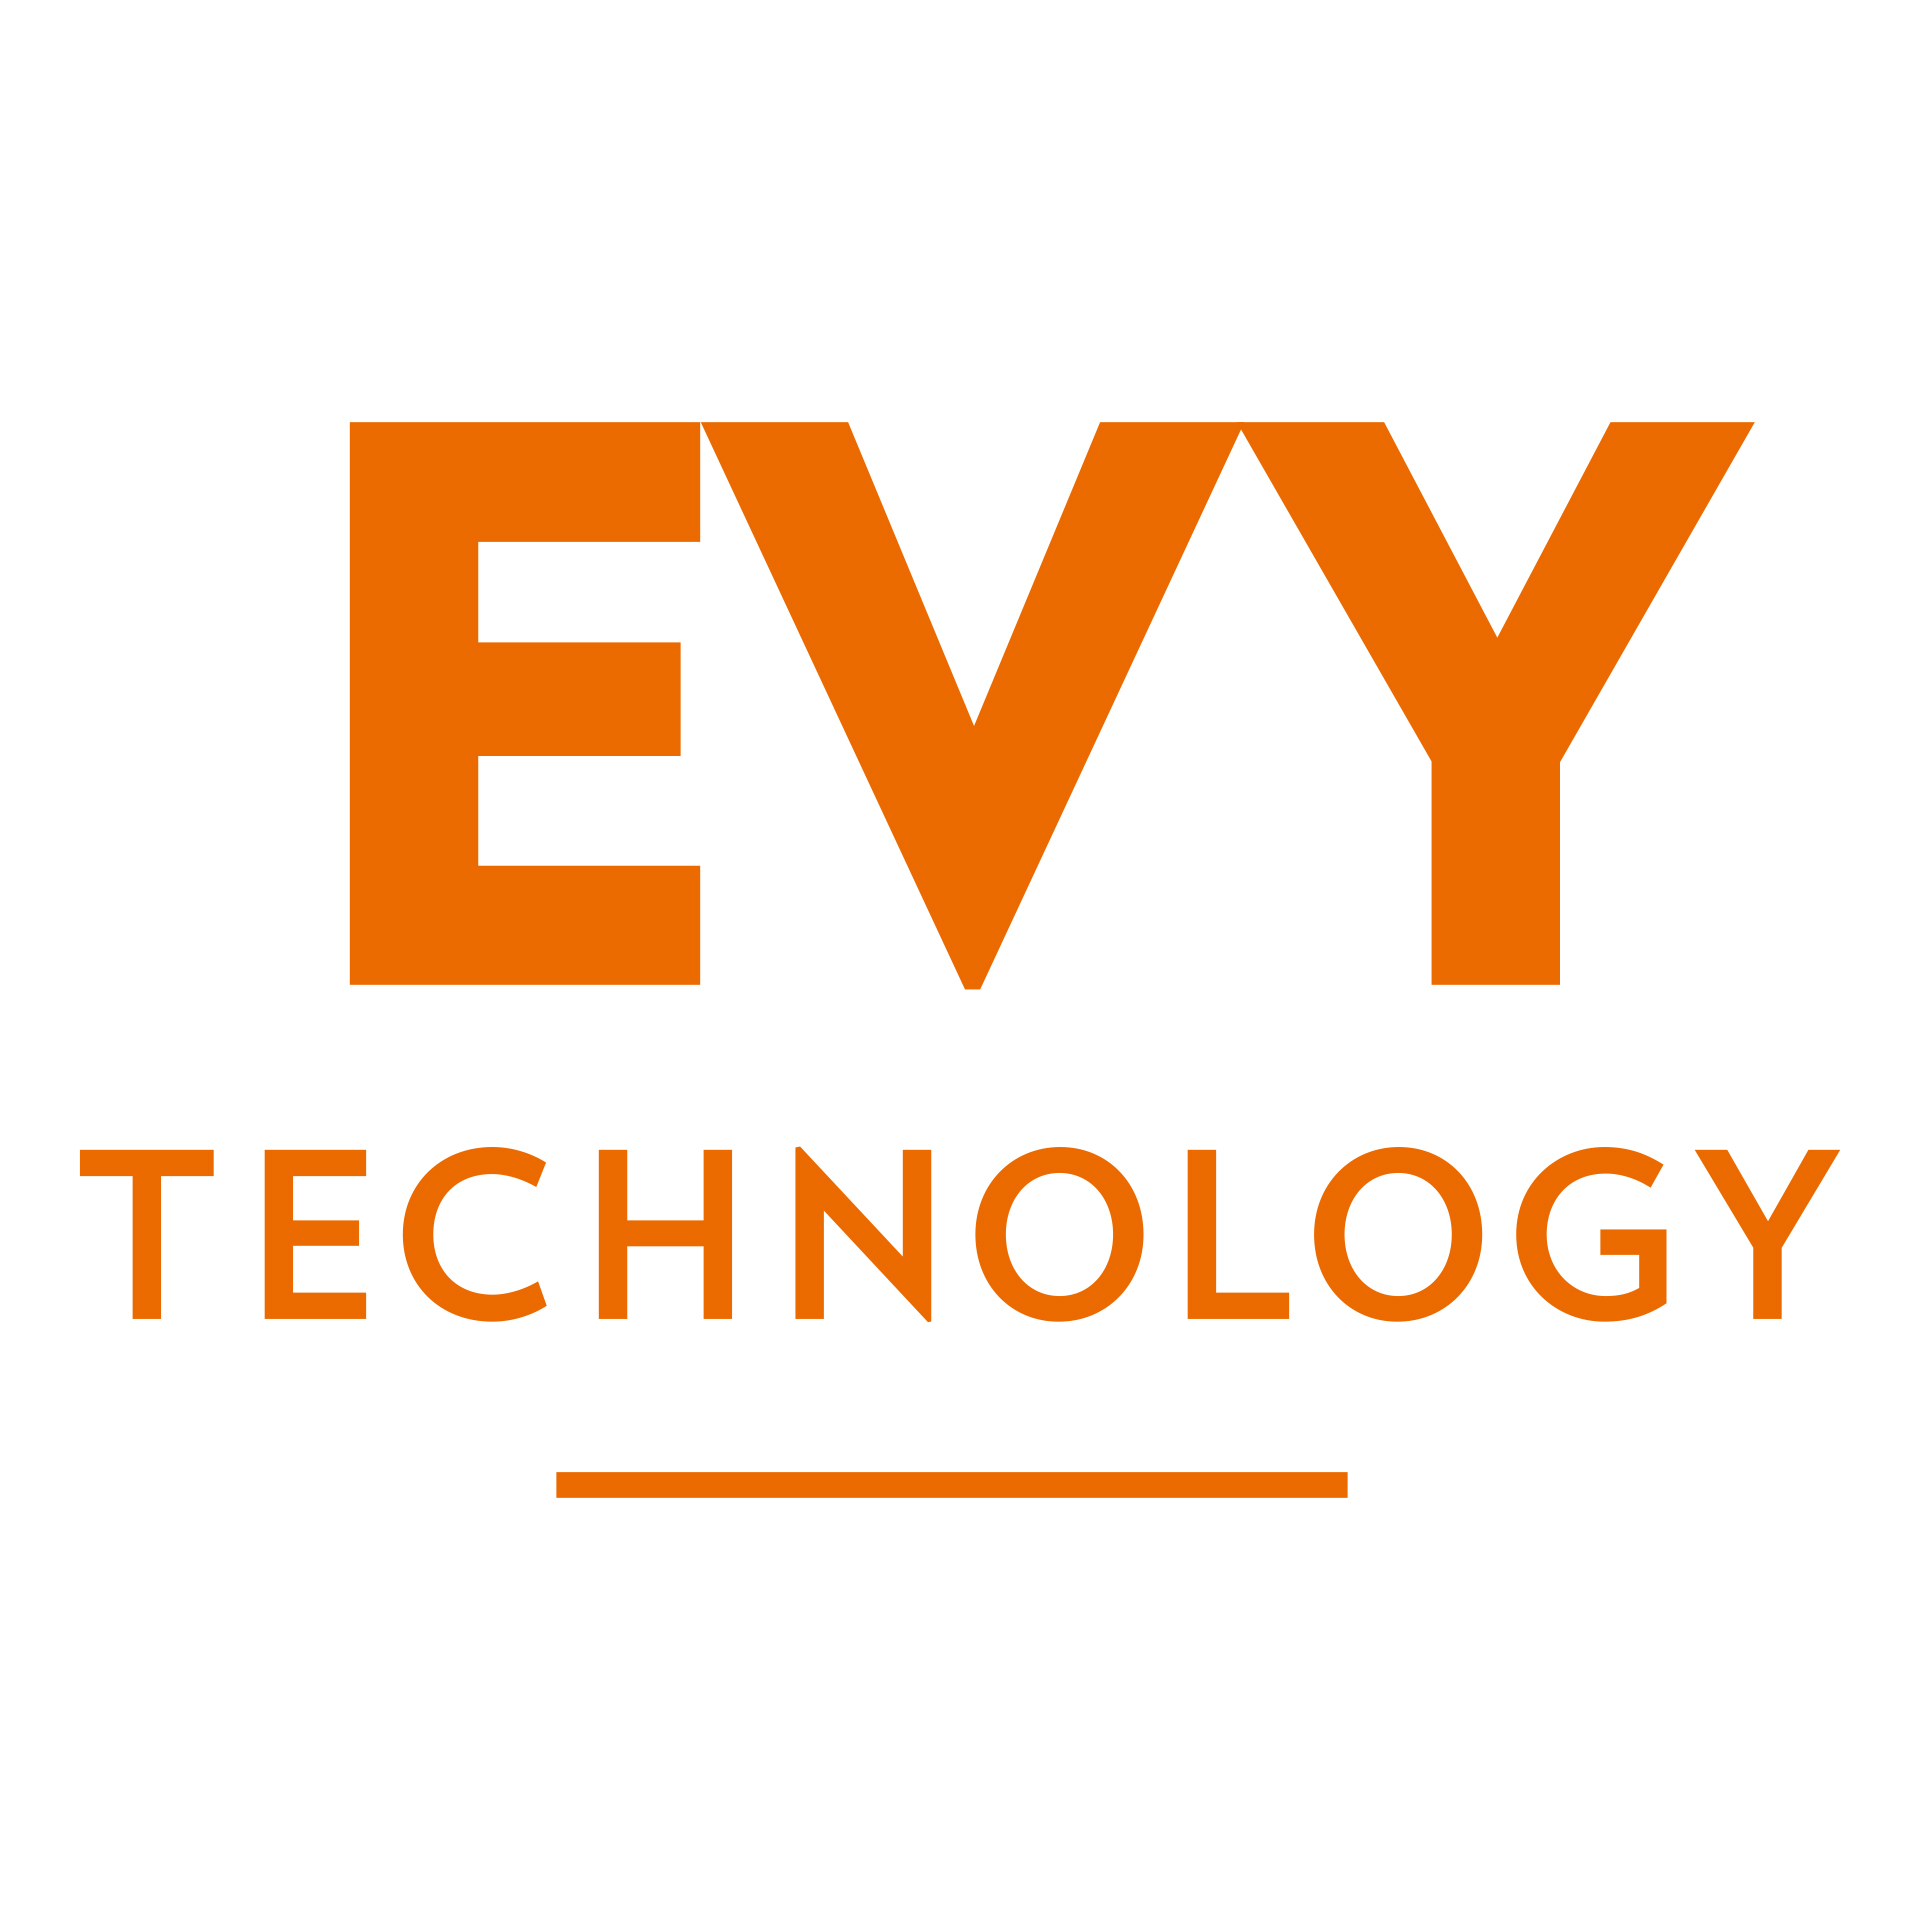 EVY Technology